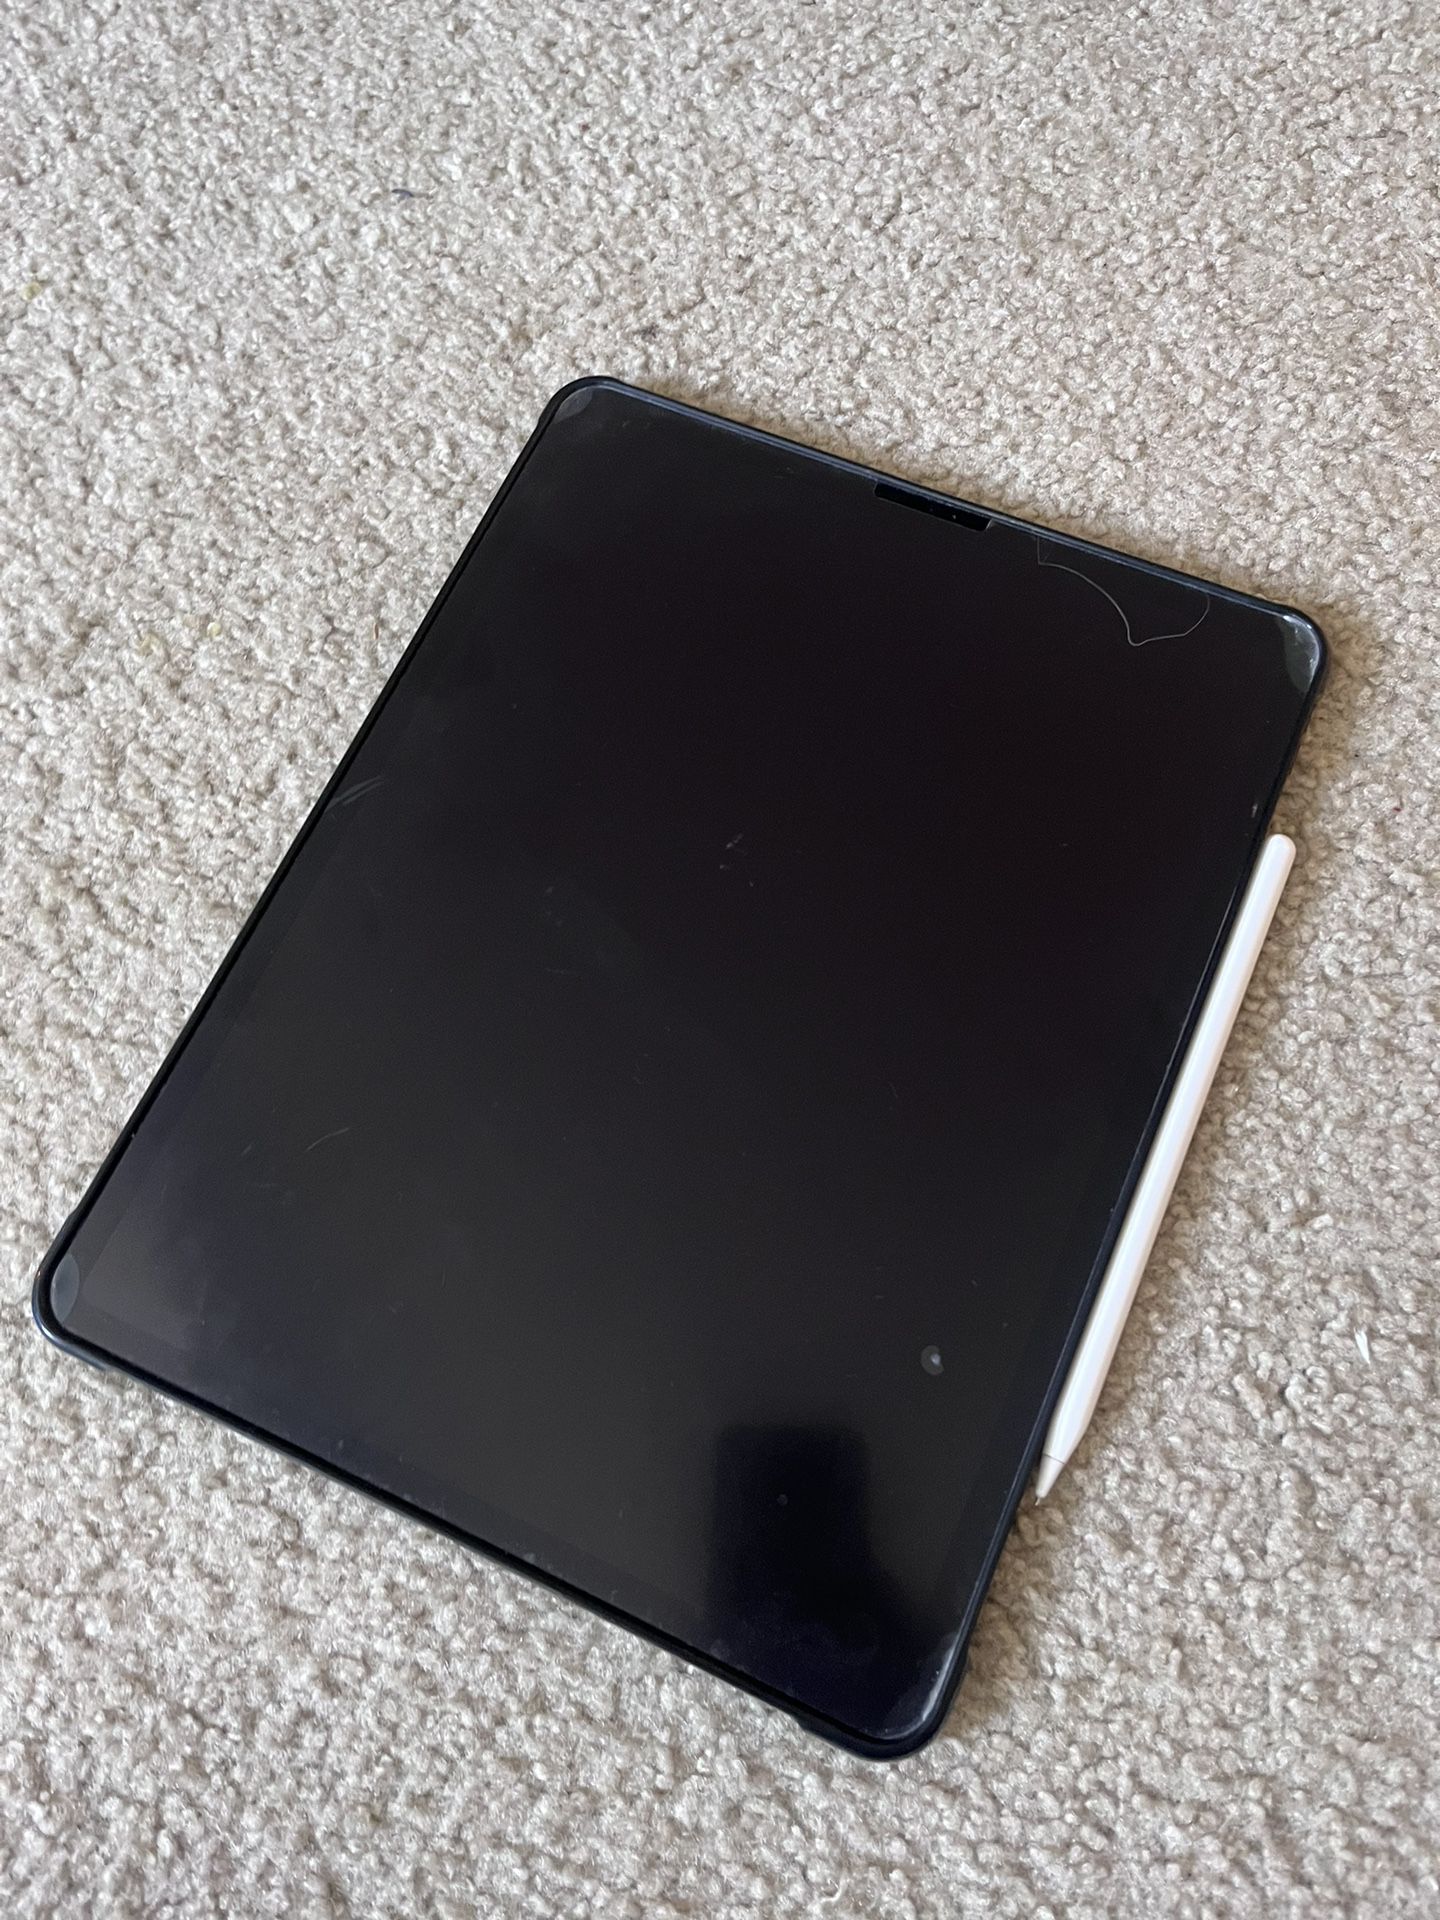 iPad Pro 12.9 4th Generation 